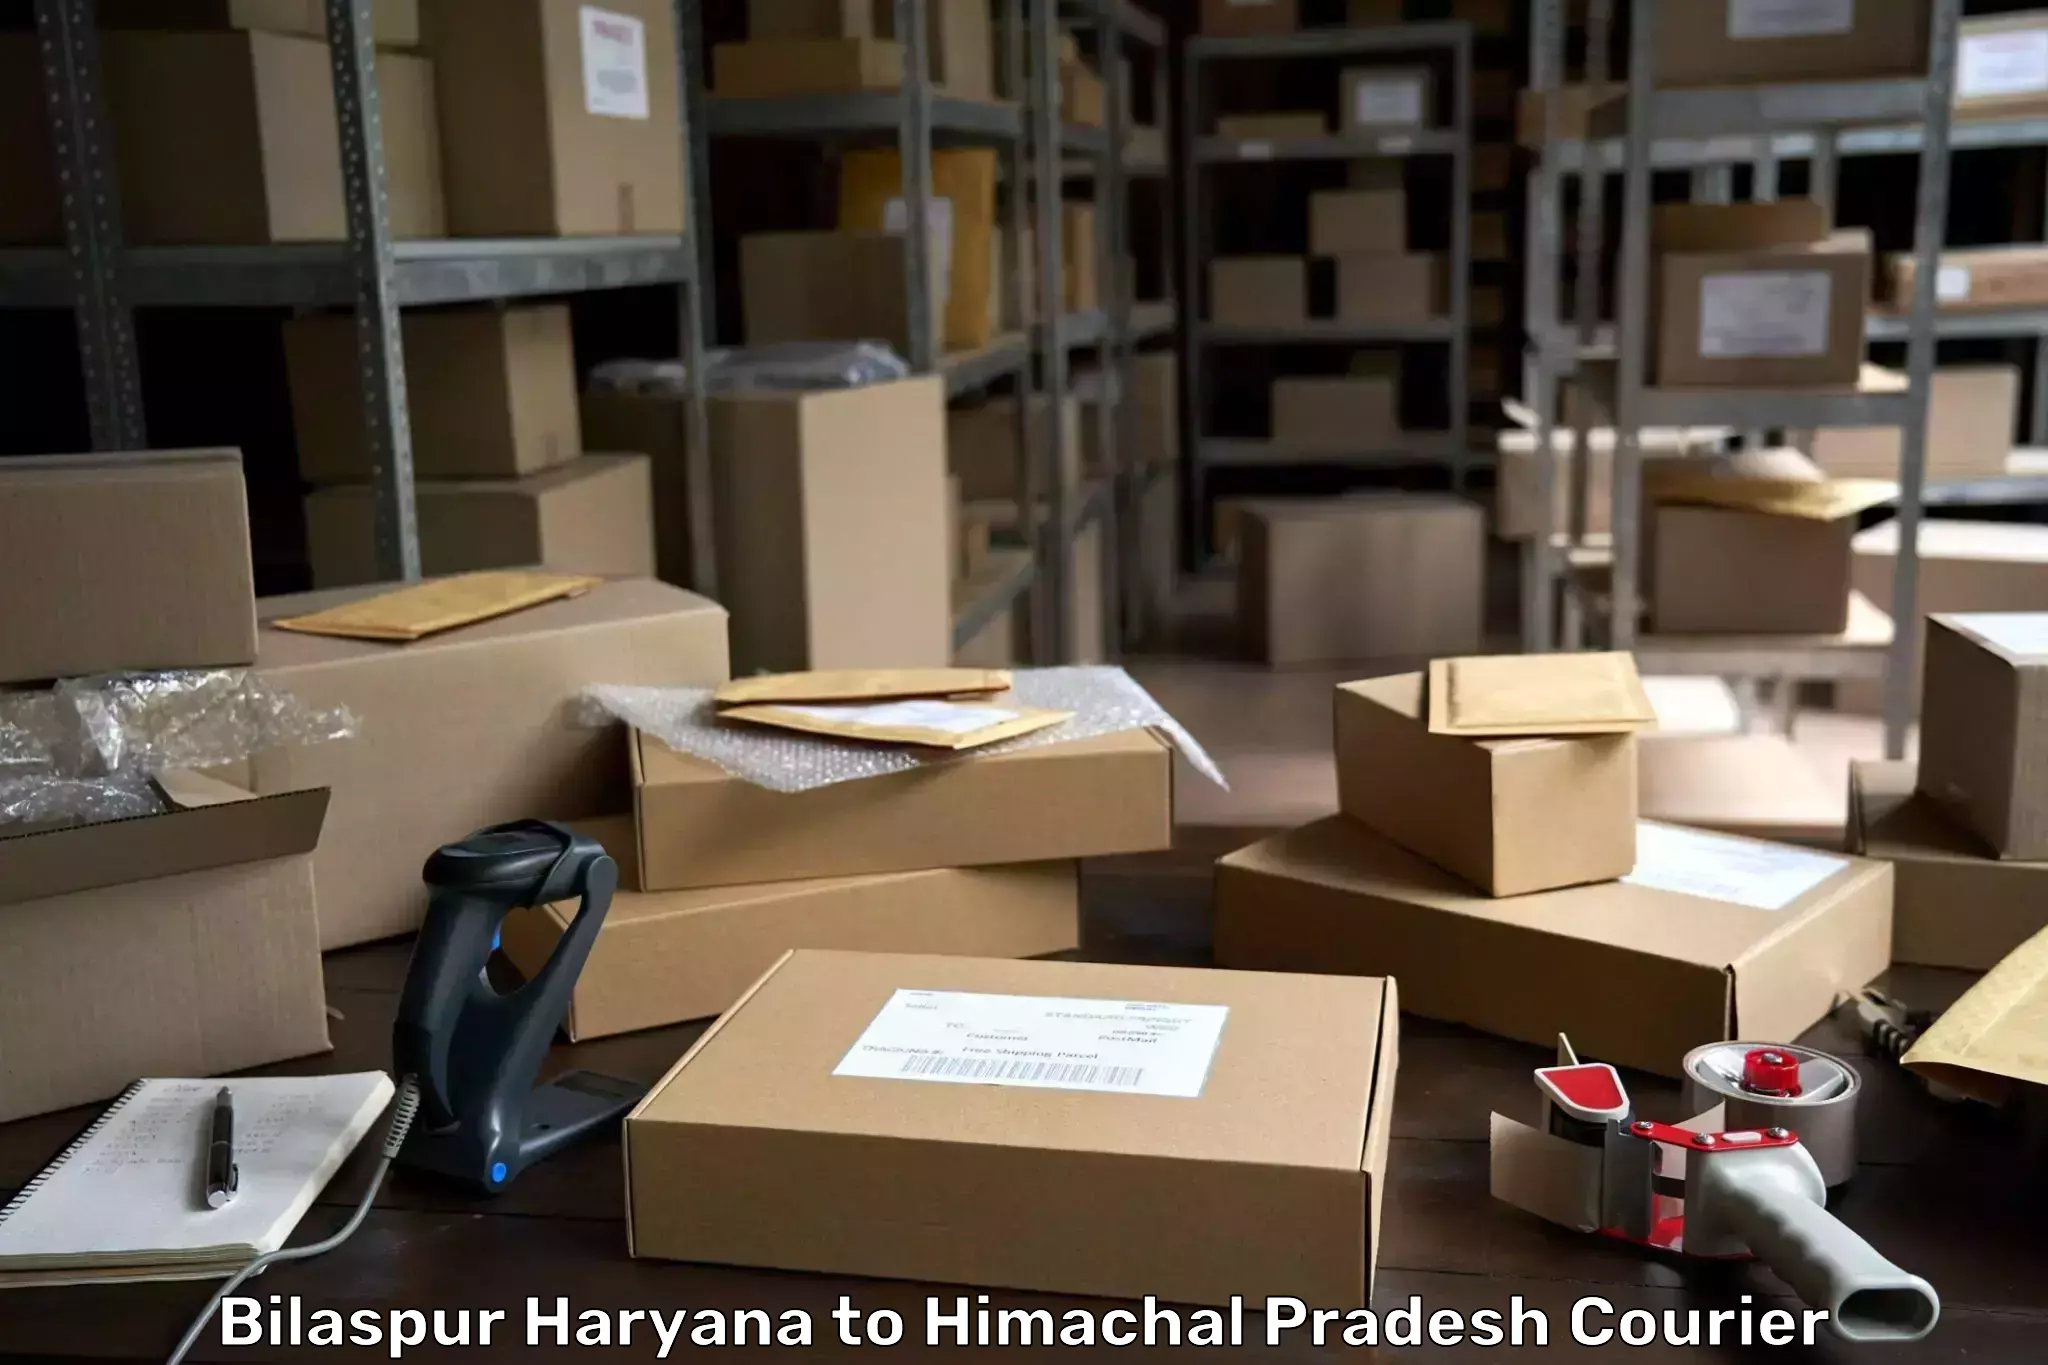 Courier service comparison in Bilaspur Haryana to Raipur Sahoran